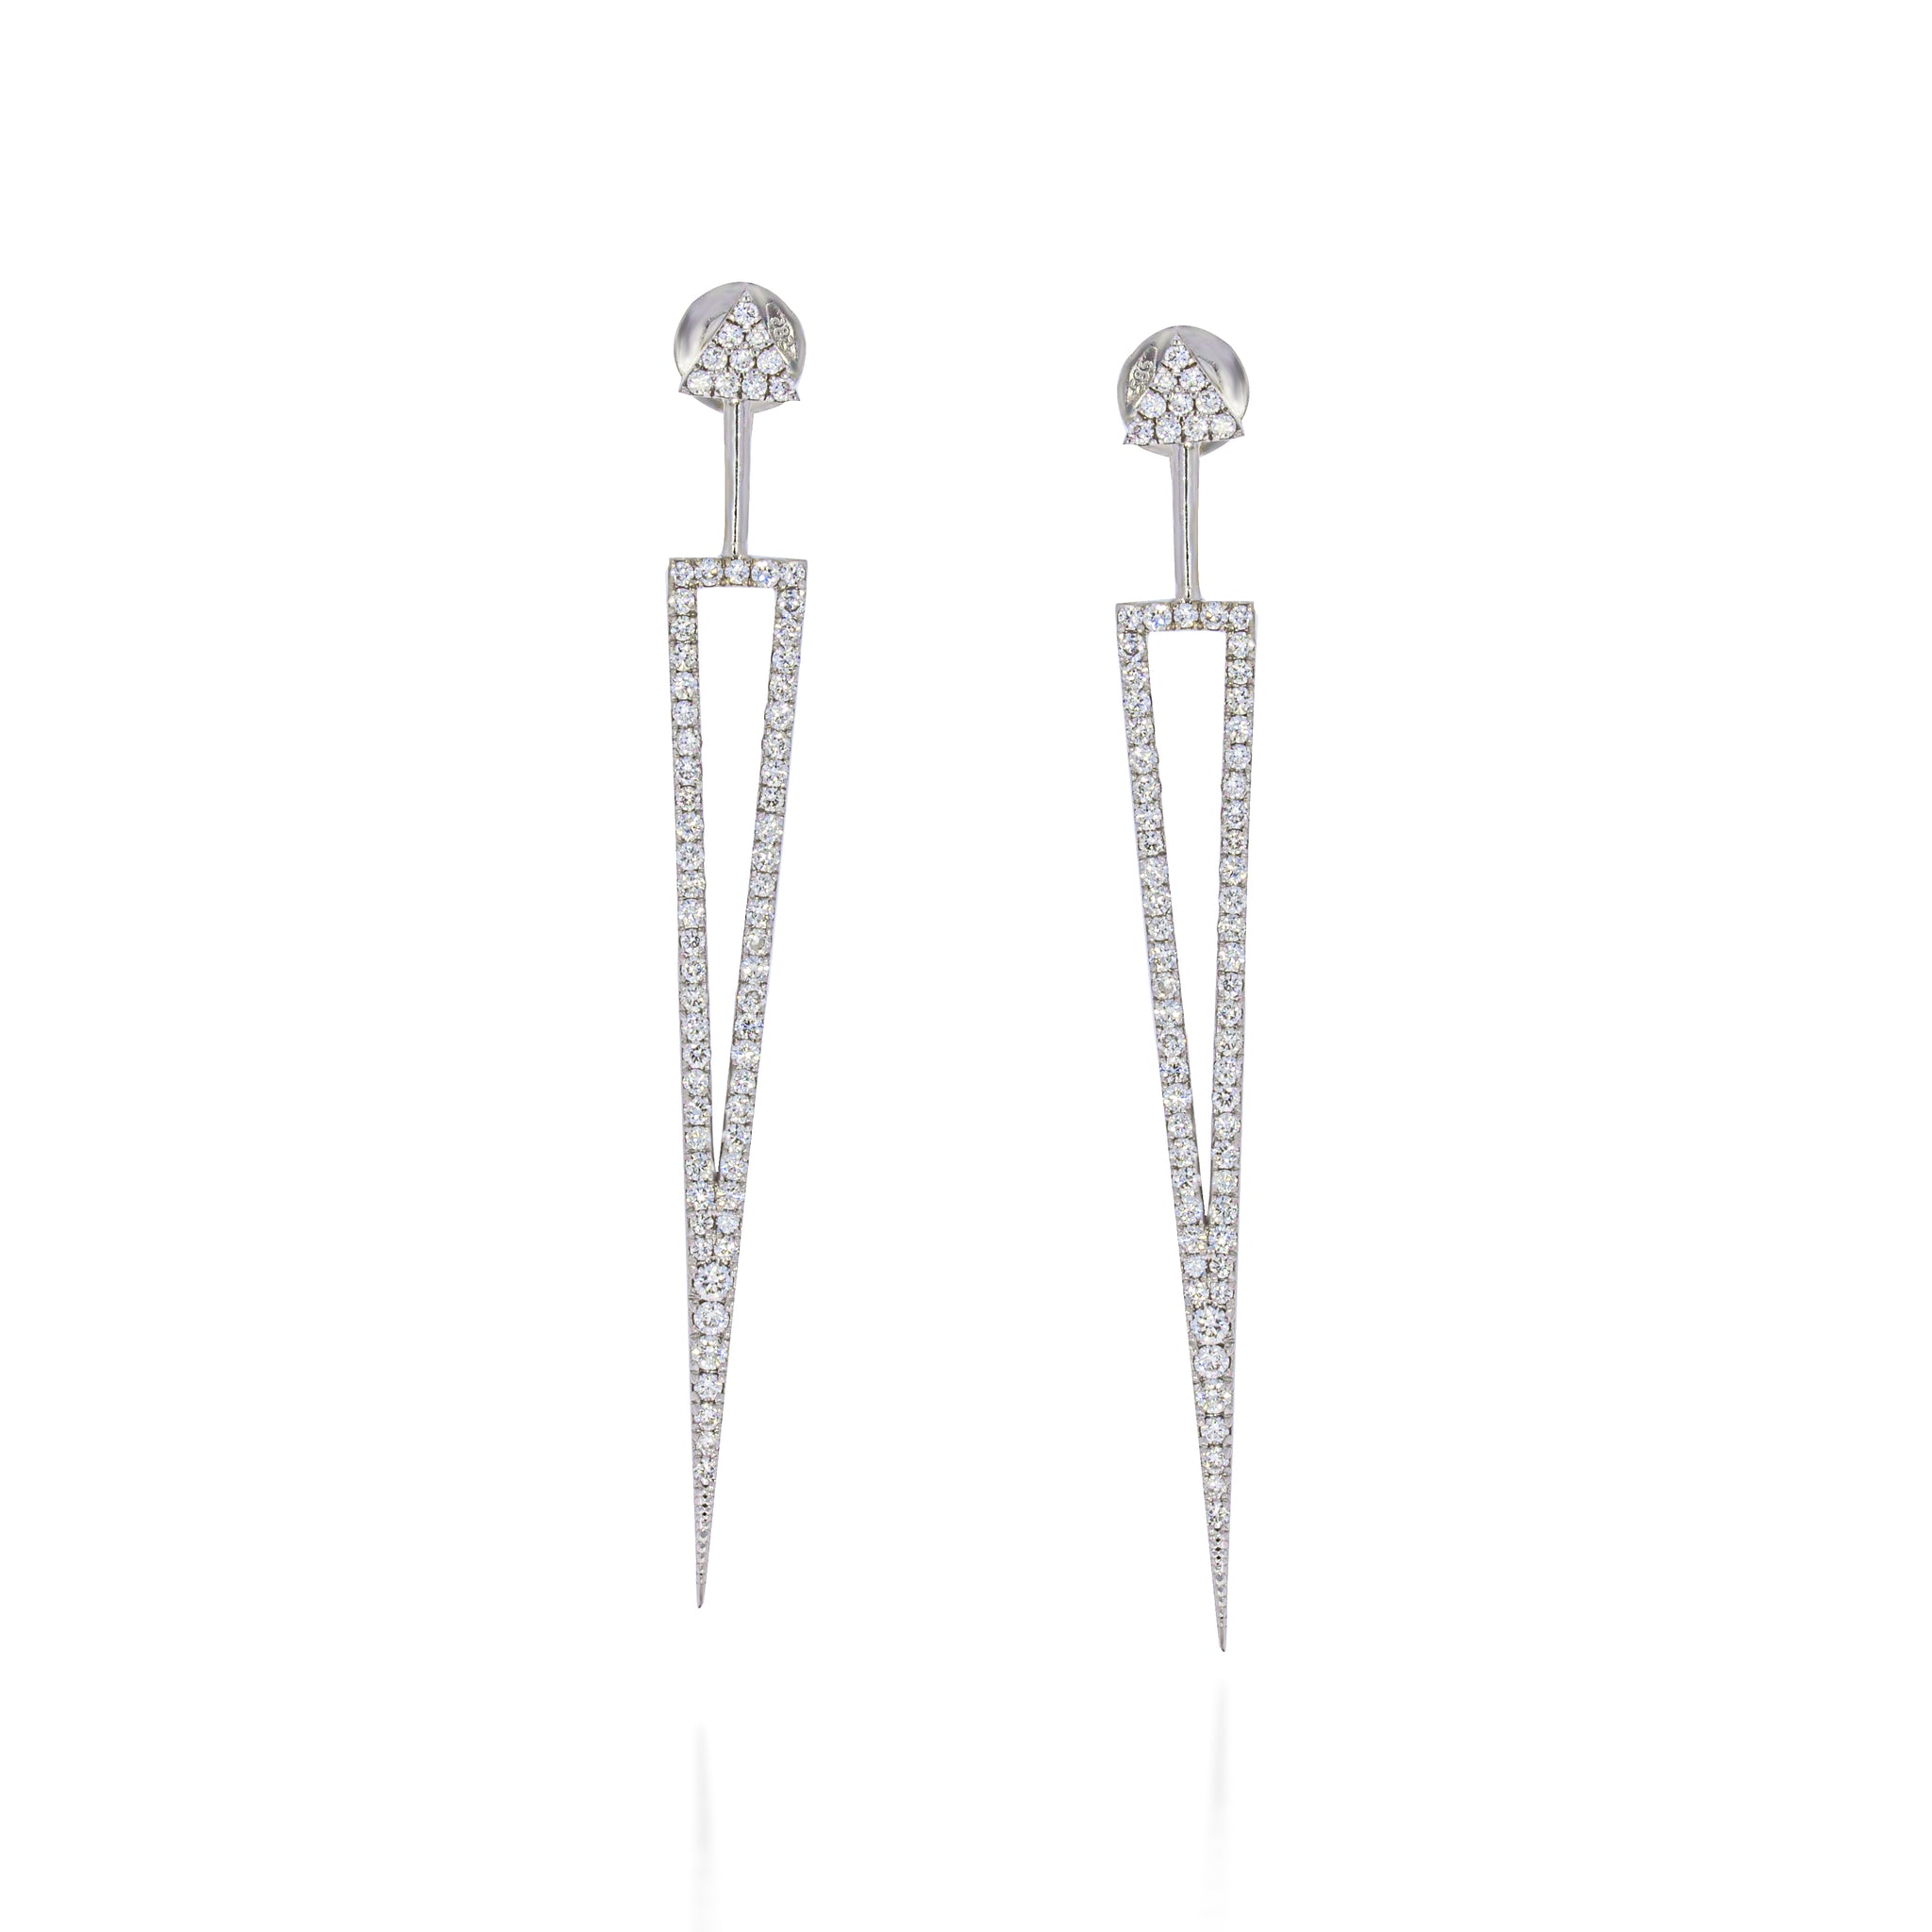 The Arus Diamond earrings - Shilpi Goyal Jewellery